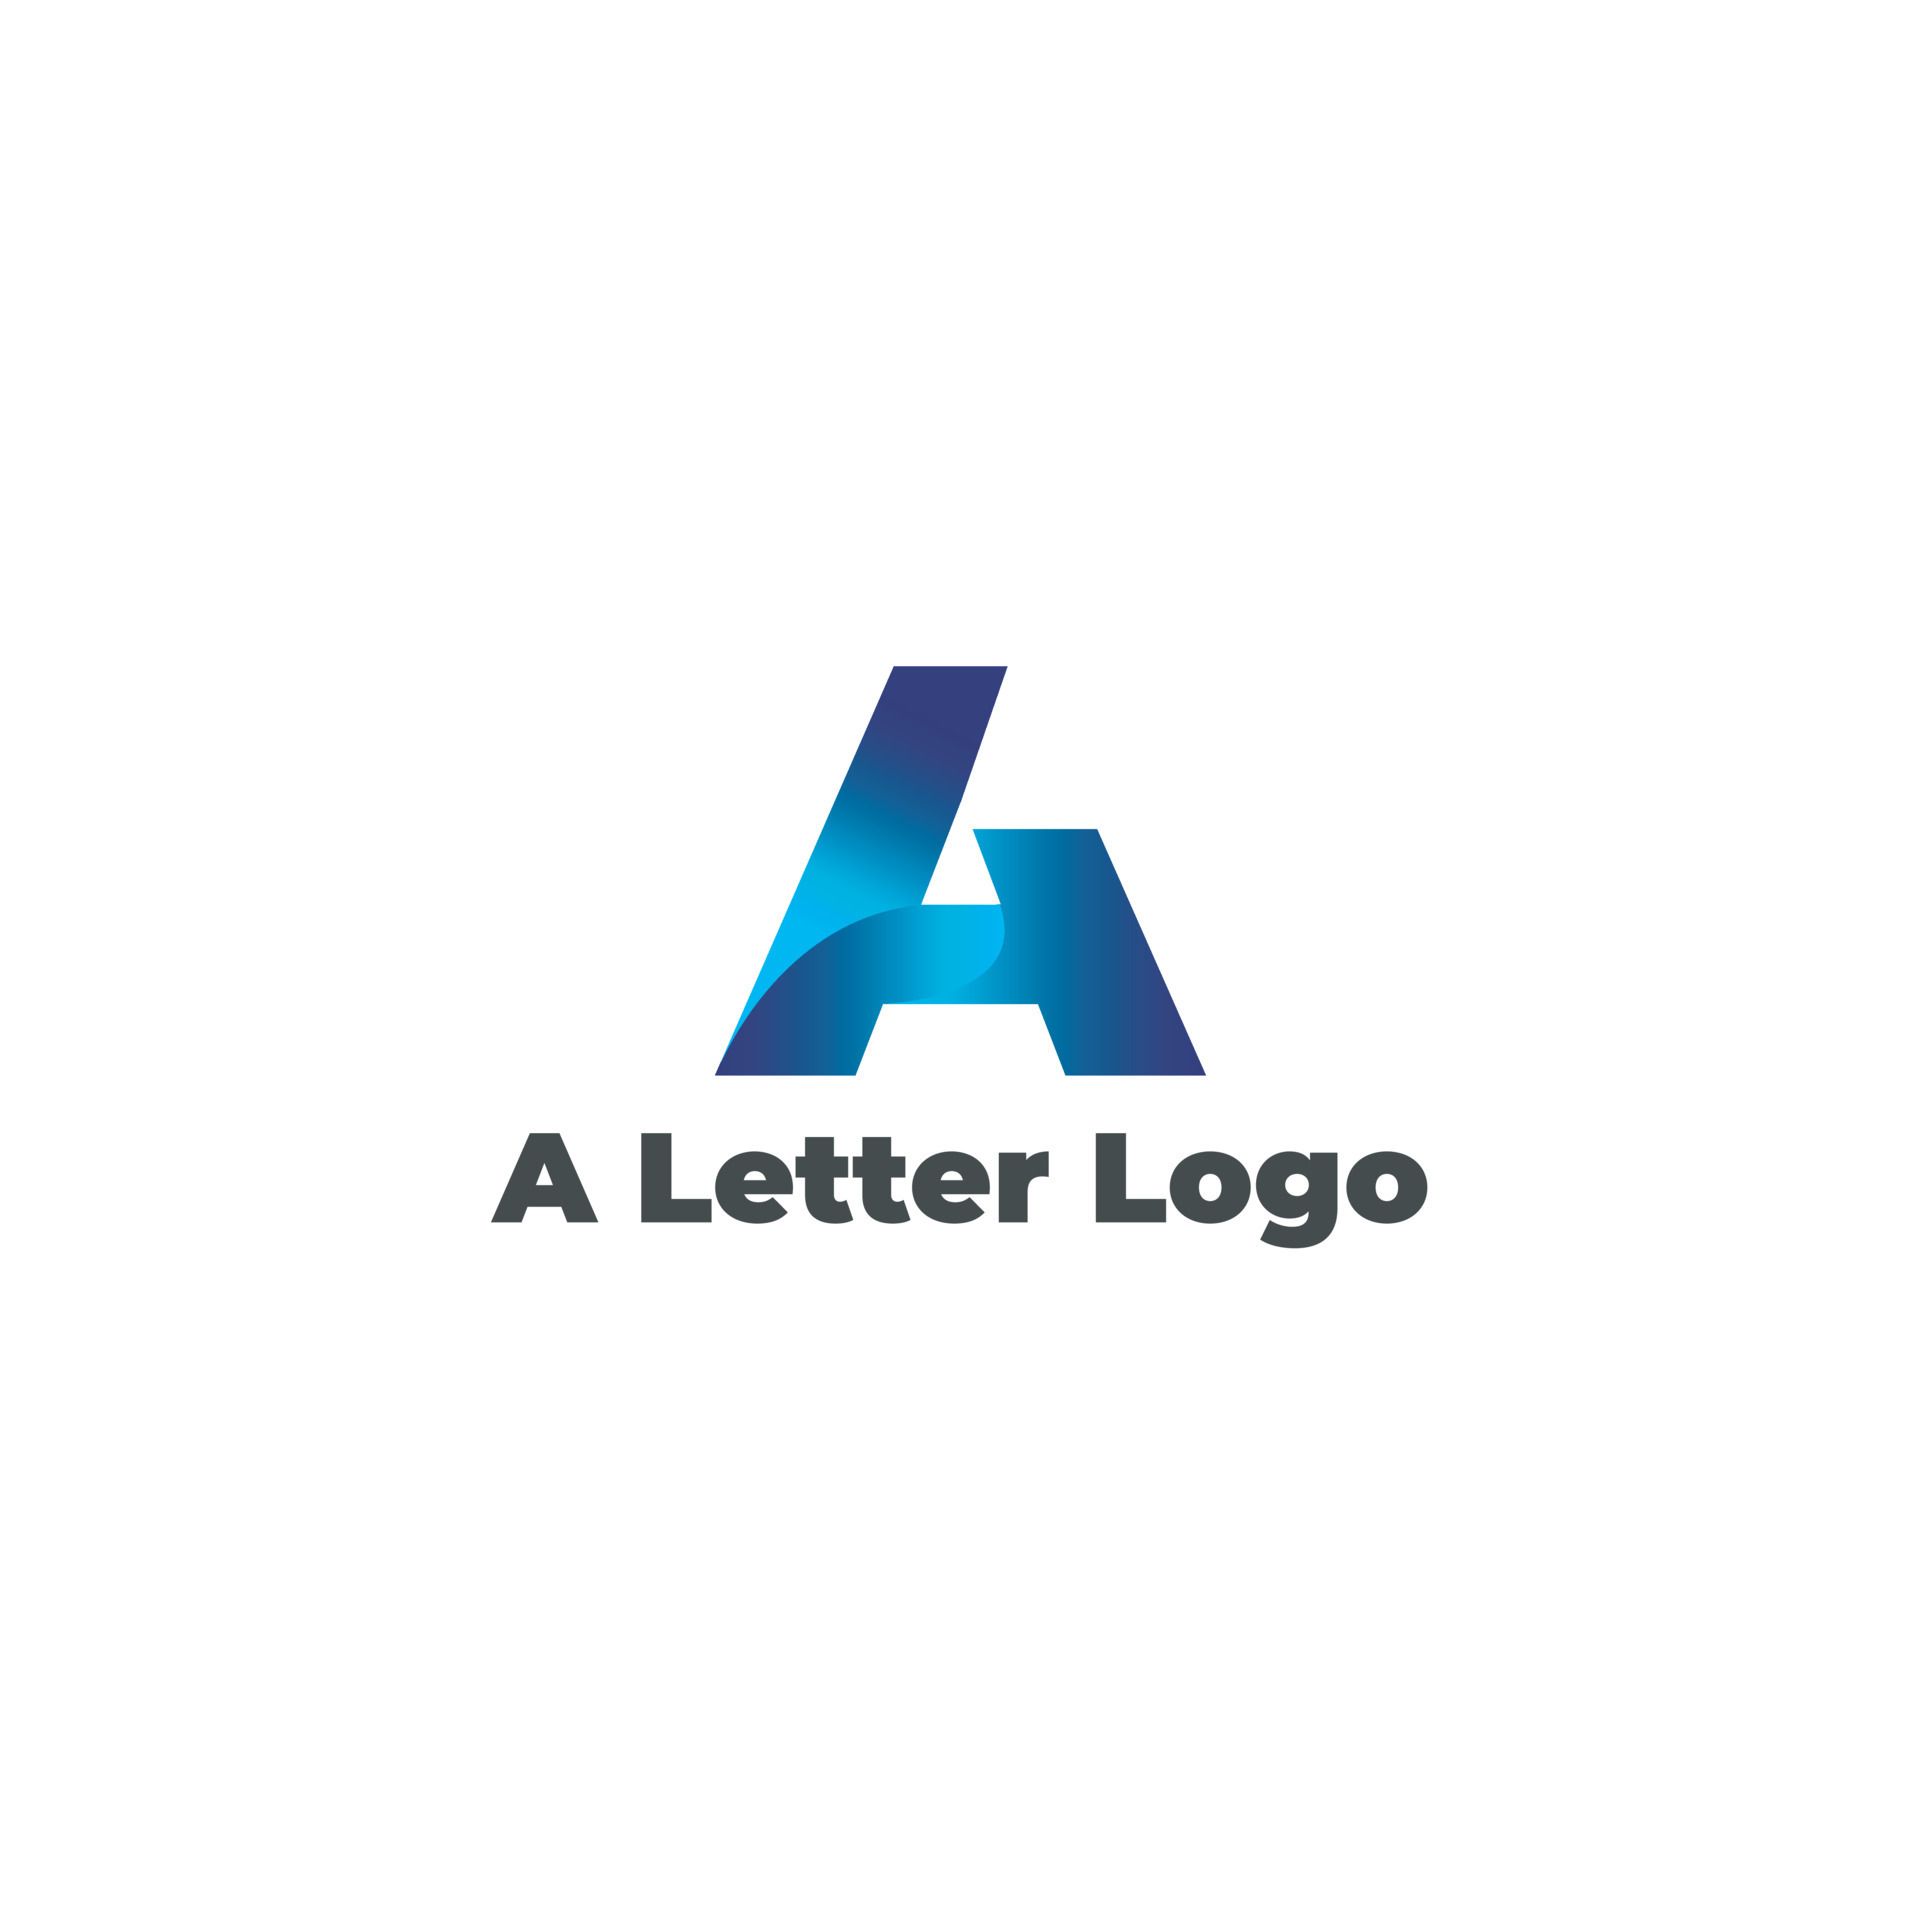 Modern and Letter logo Design Free Vector 23500092 Vector Art at Vecteezy